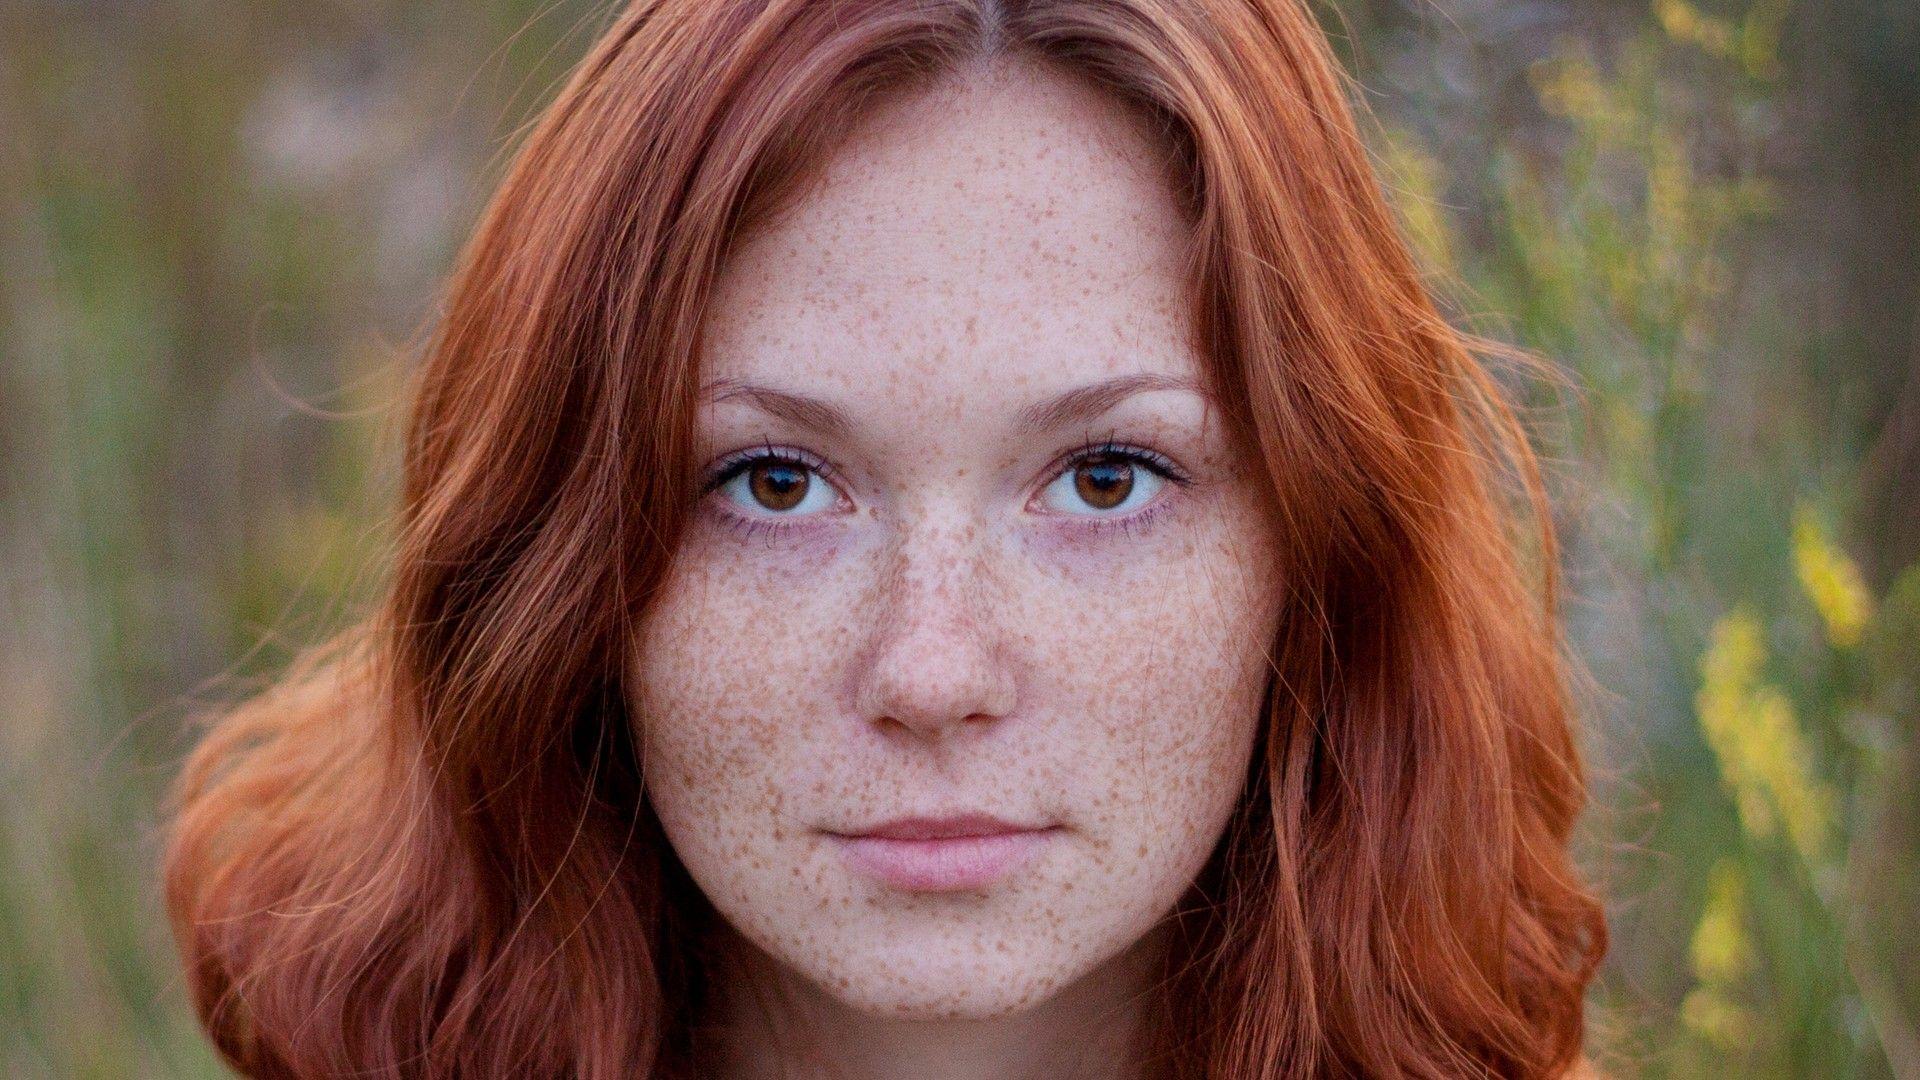 Freckles solo photo